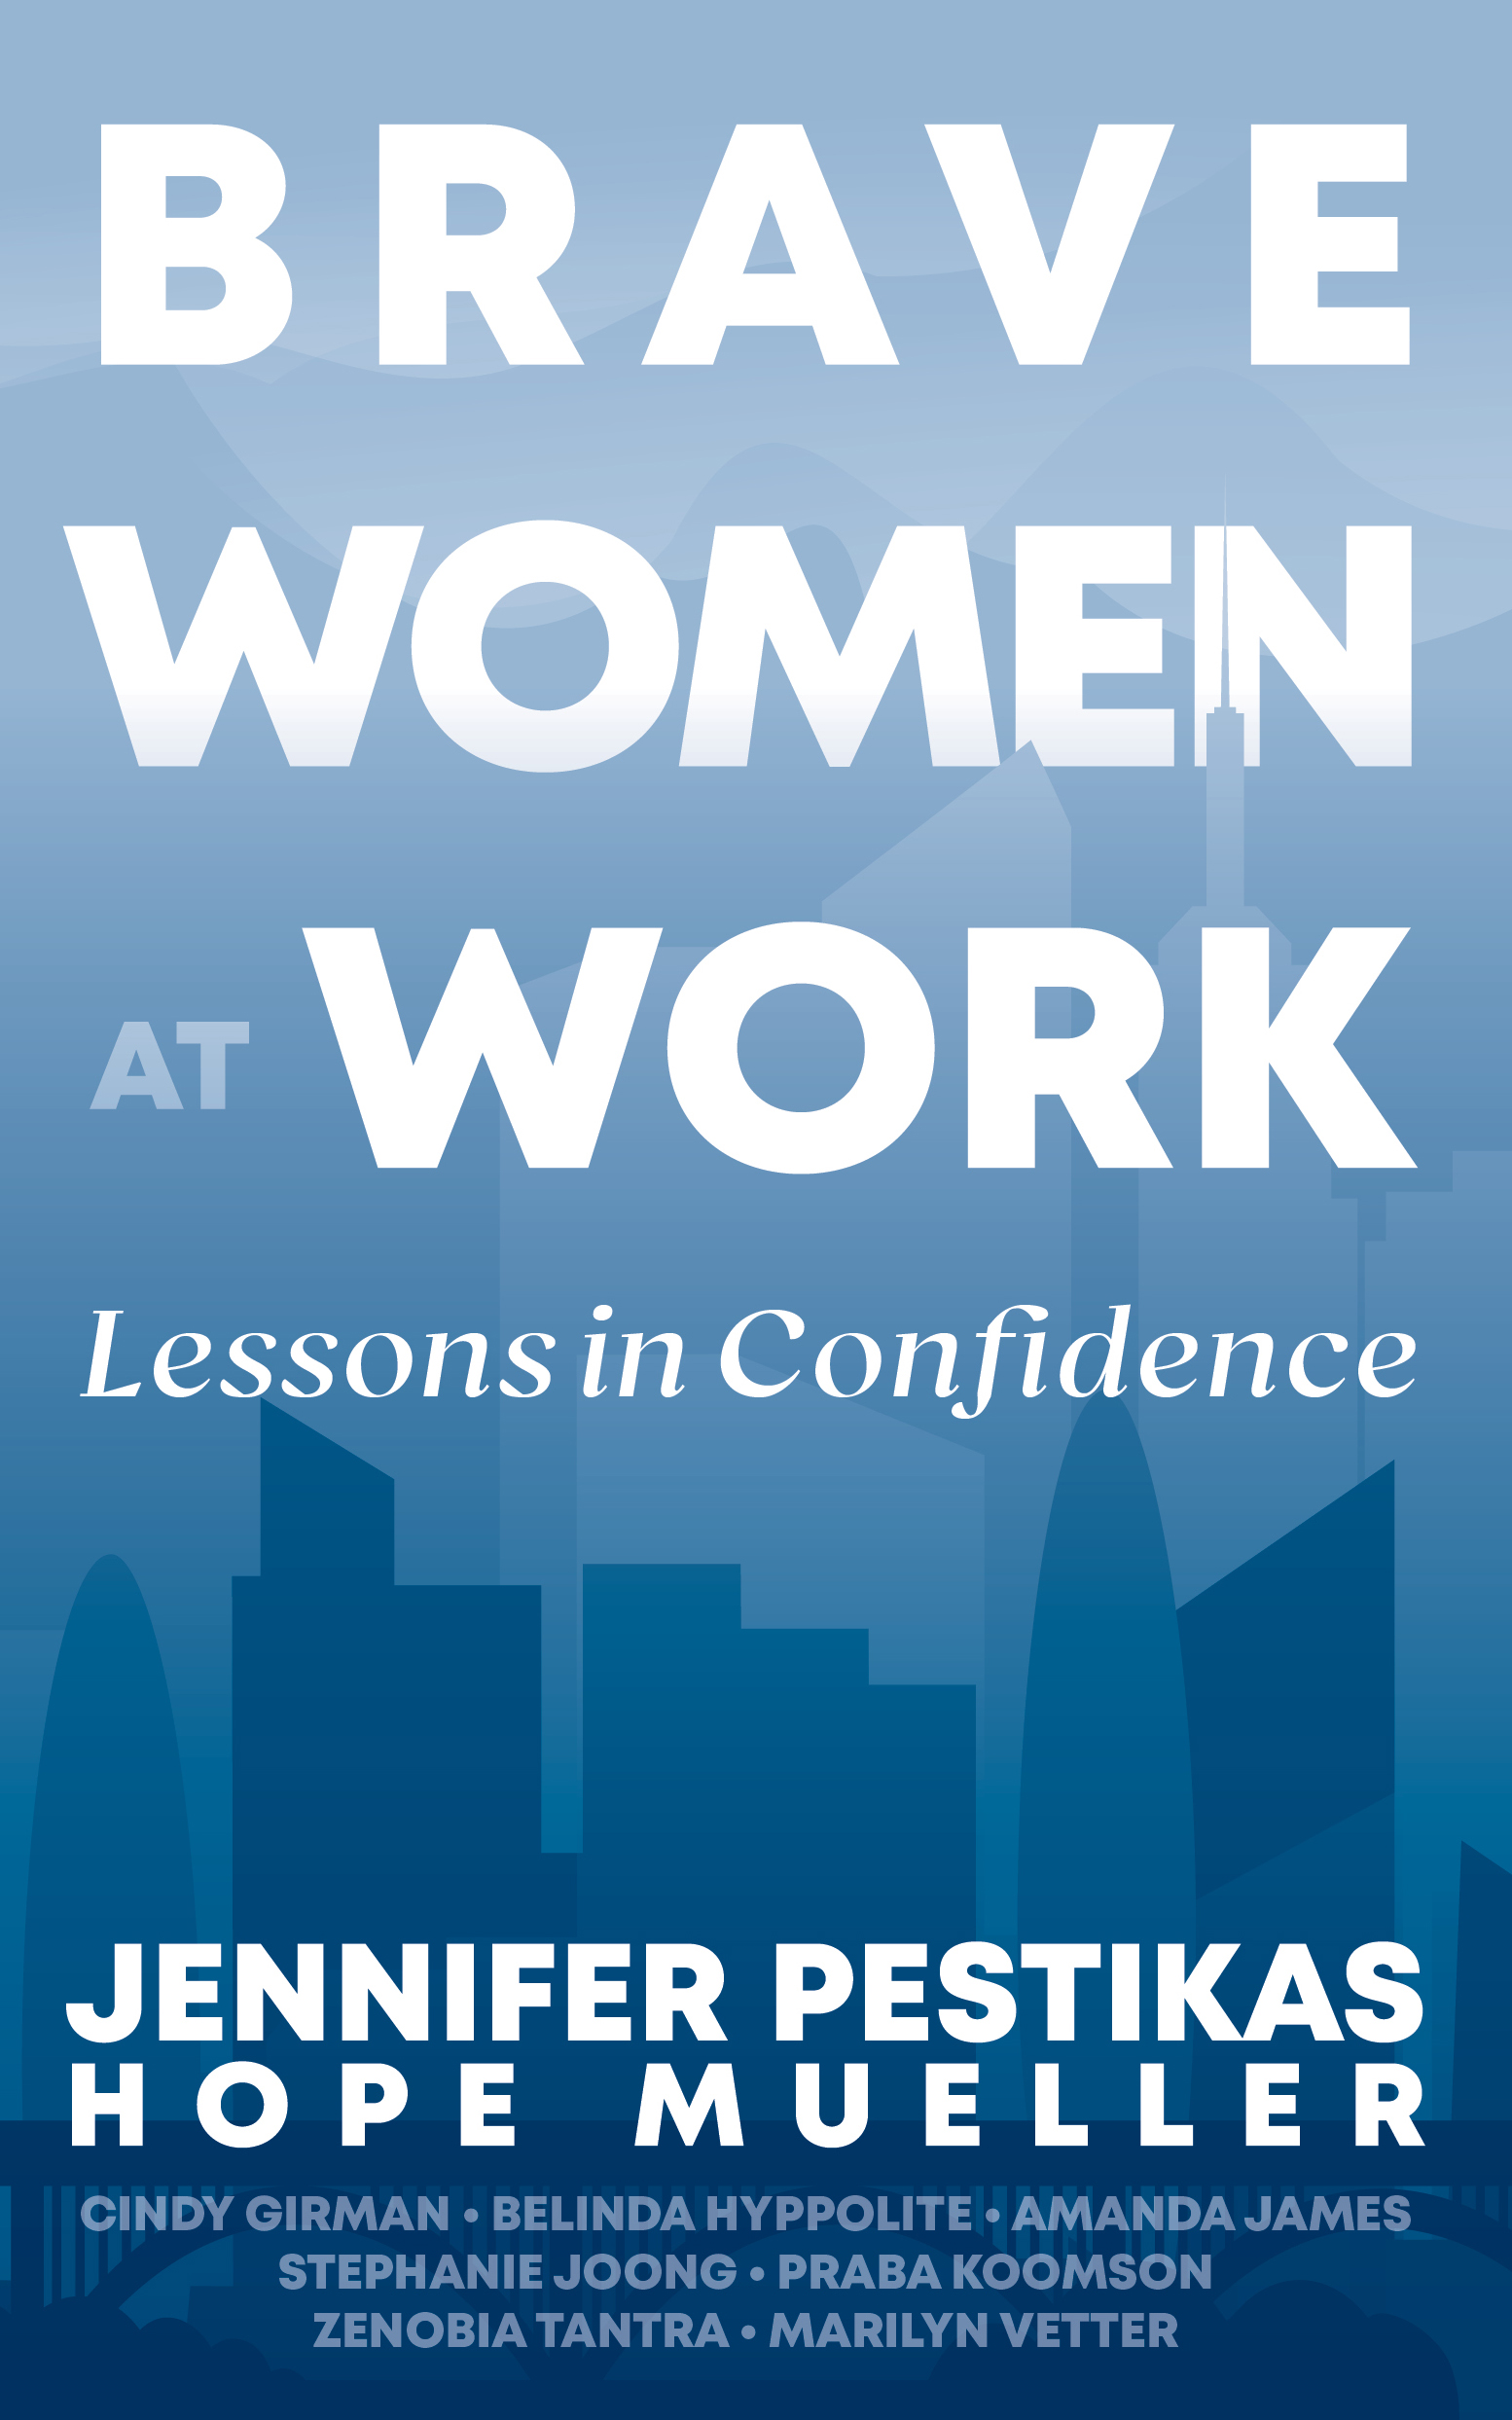 Brave Women at Work by Jennifer Pestikas